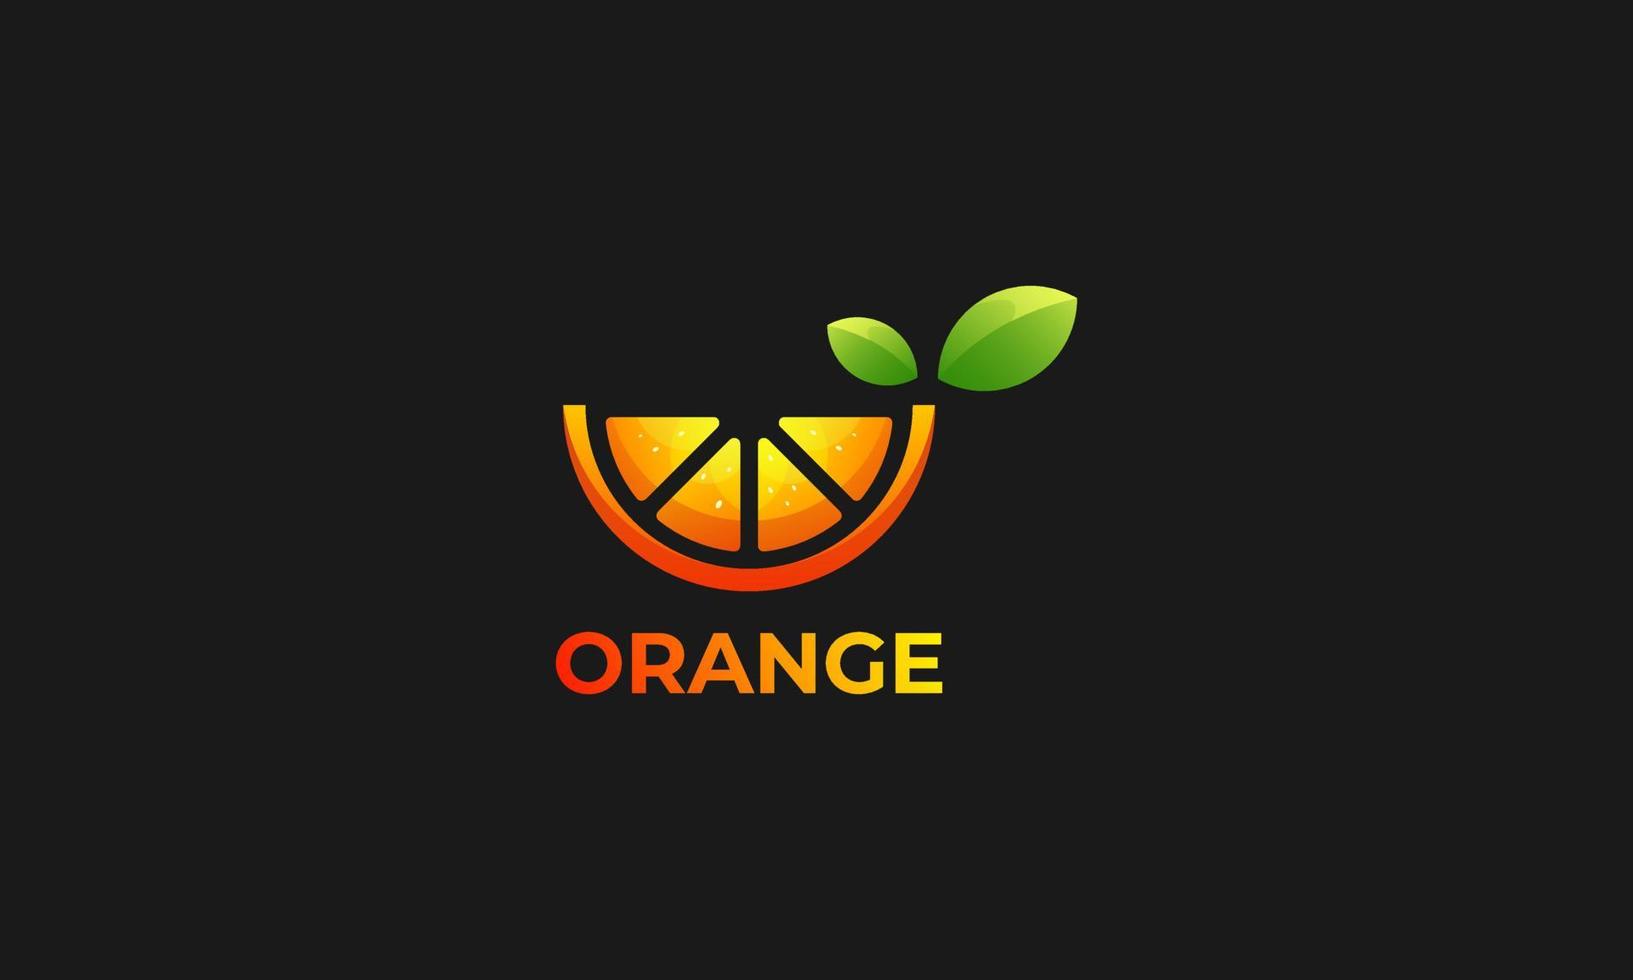 Orange fruit logo design Vector icon illustration design